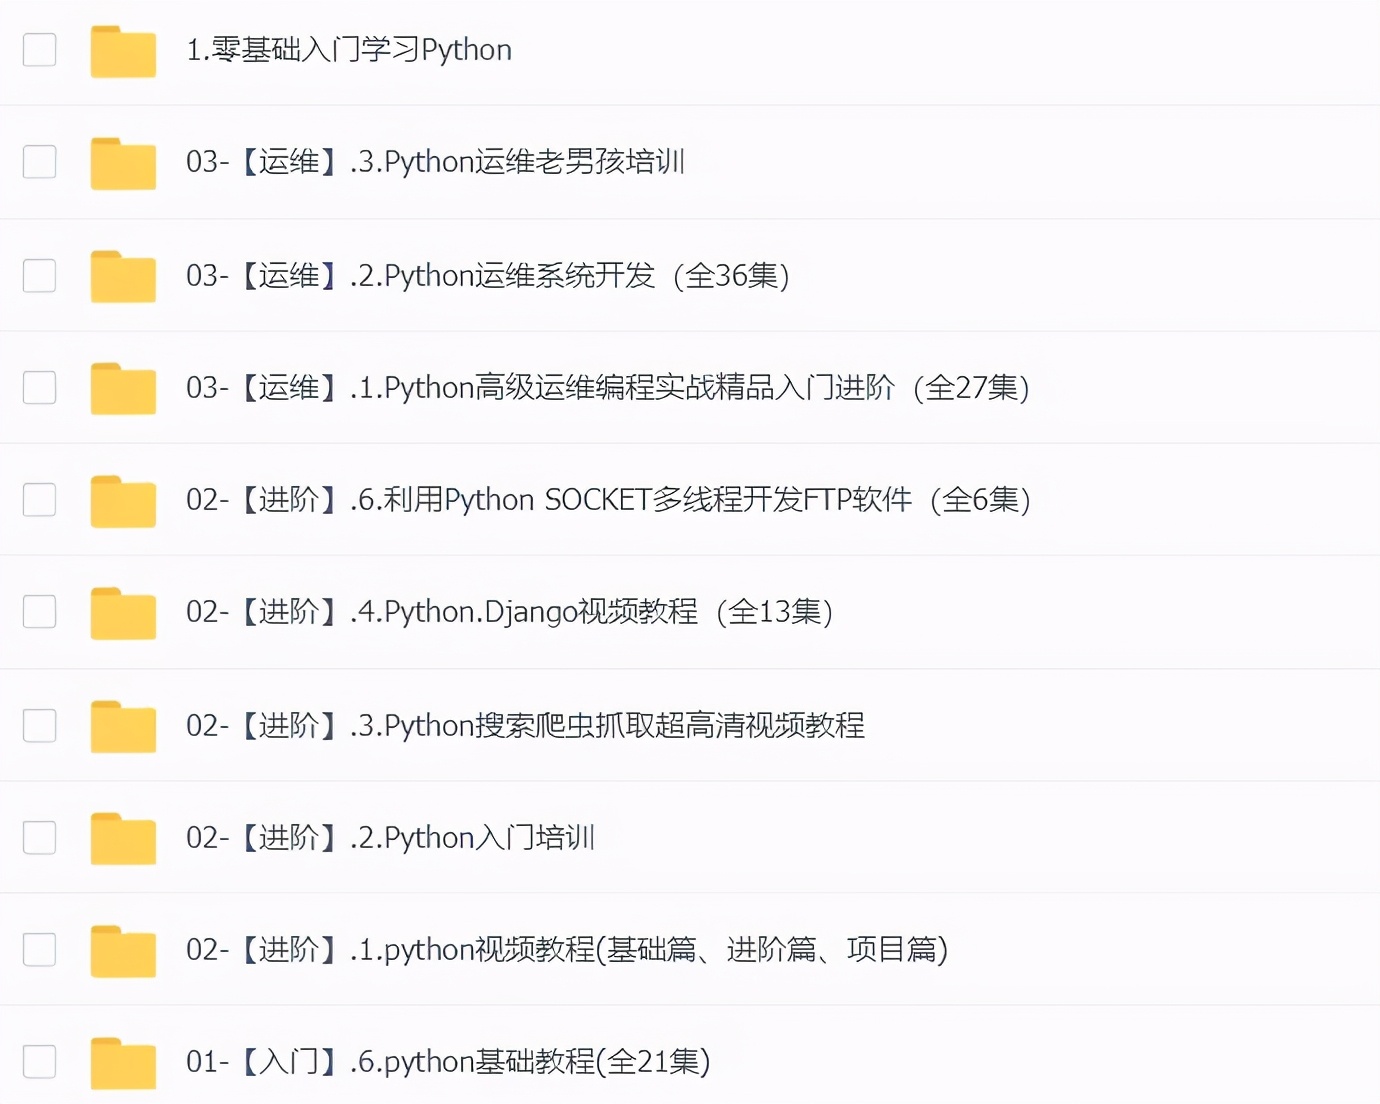 iPad Pro|中国科学院花42小时讲完的Python教程，整整632集，赶快拿走